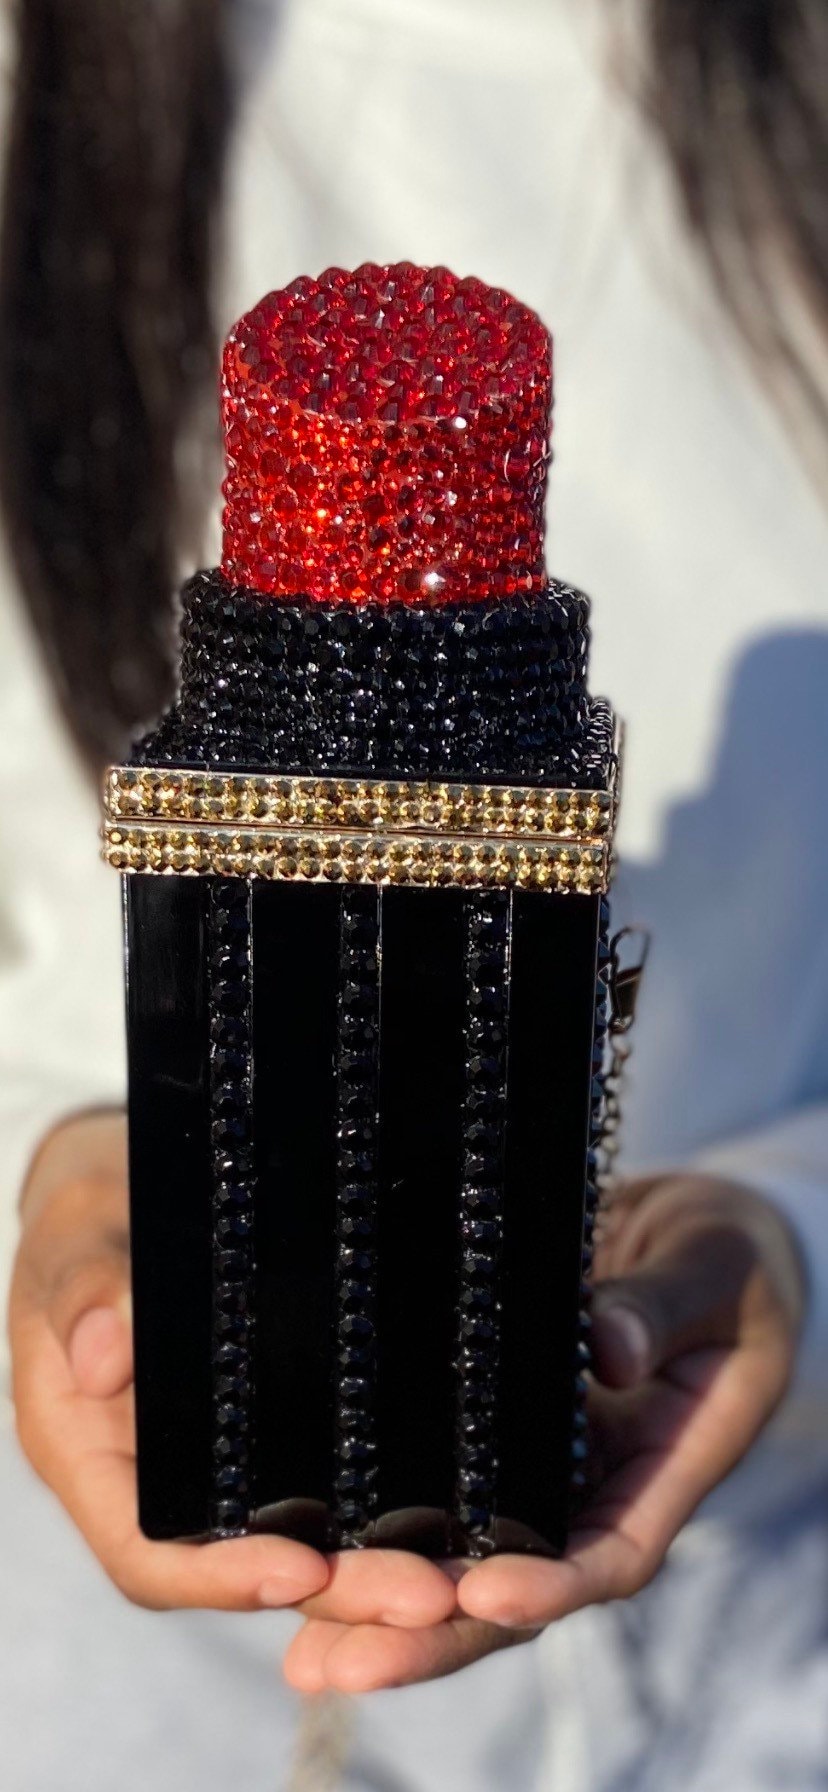 Fashion Gradient Rhinestone Coin Purse Lipstick Bag Keychain Light